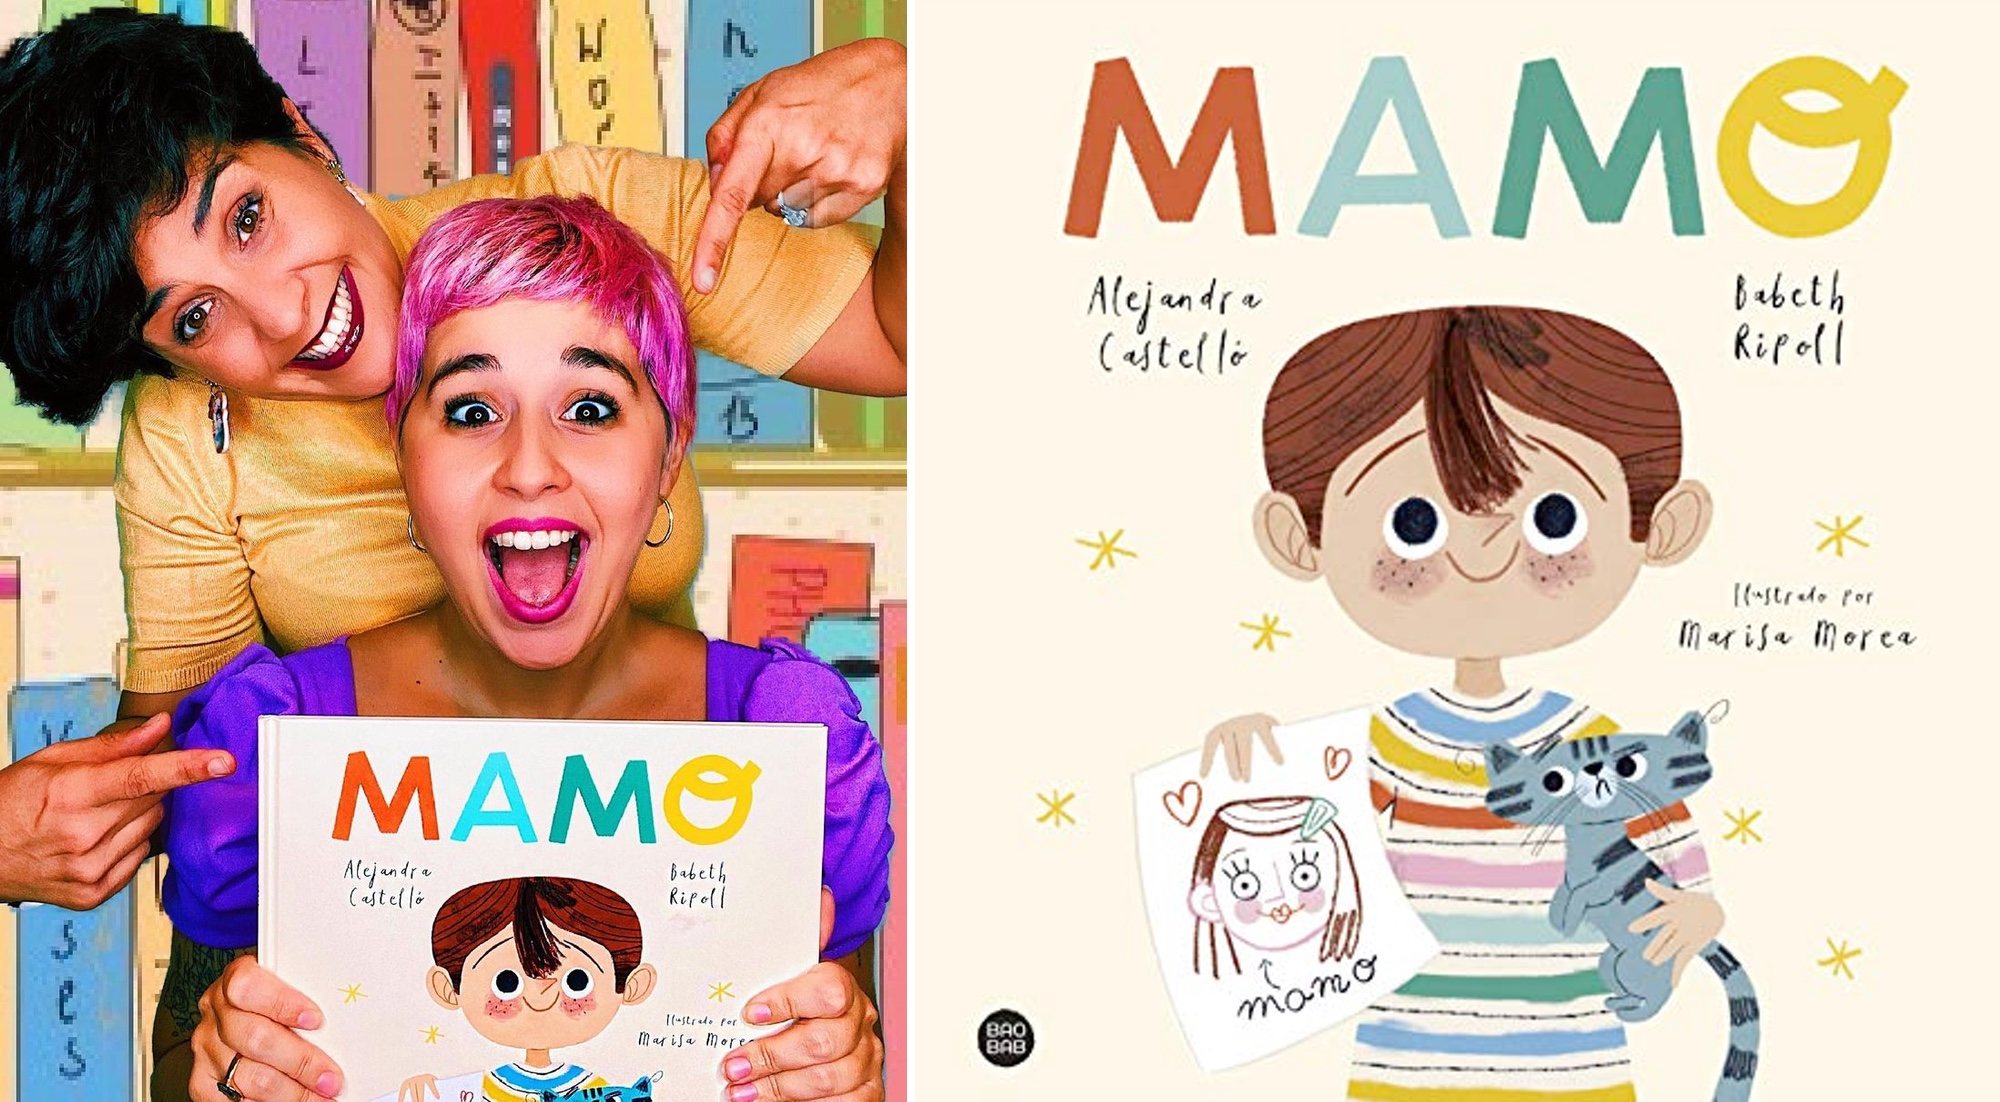 Alejandra Castelló y Babeth Ripoll publican "Mamo"